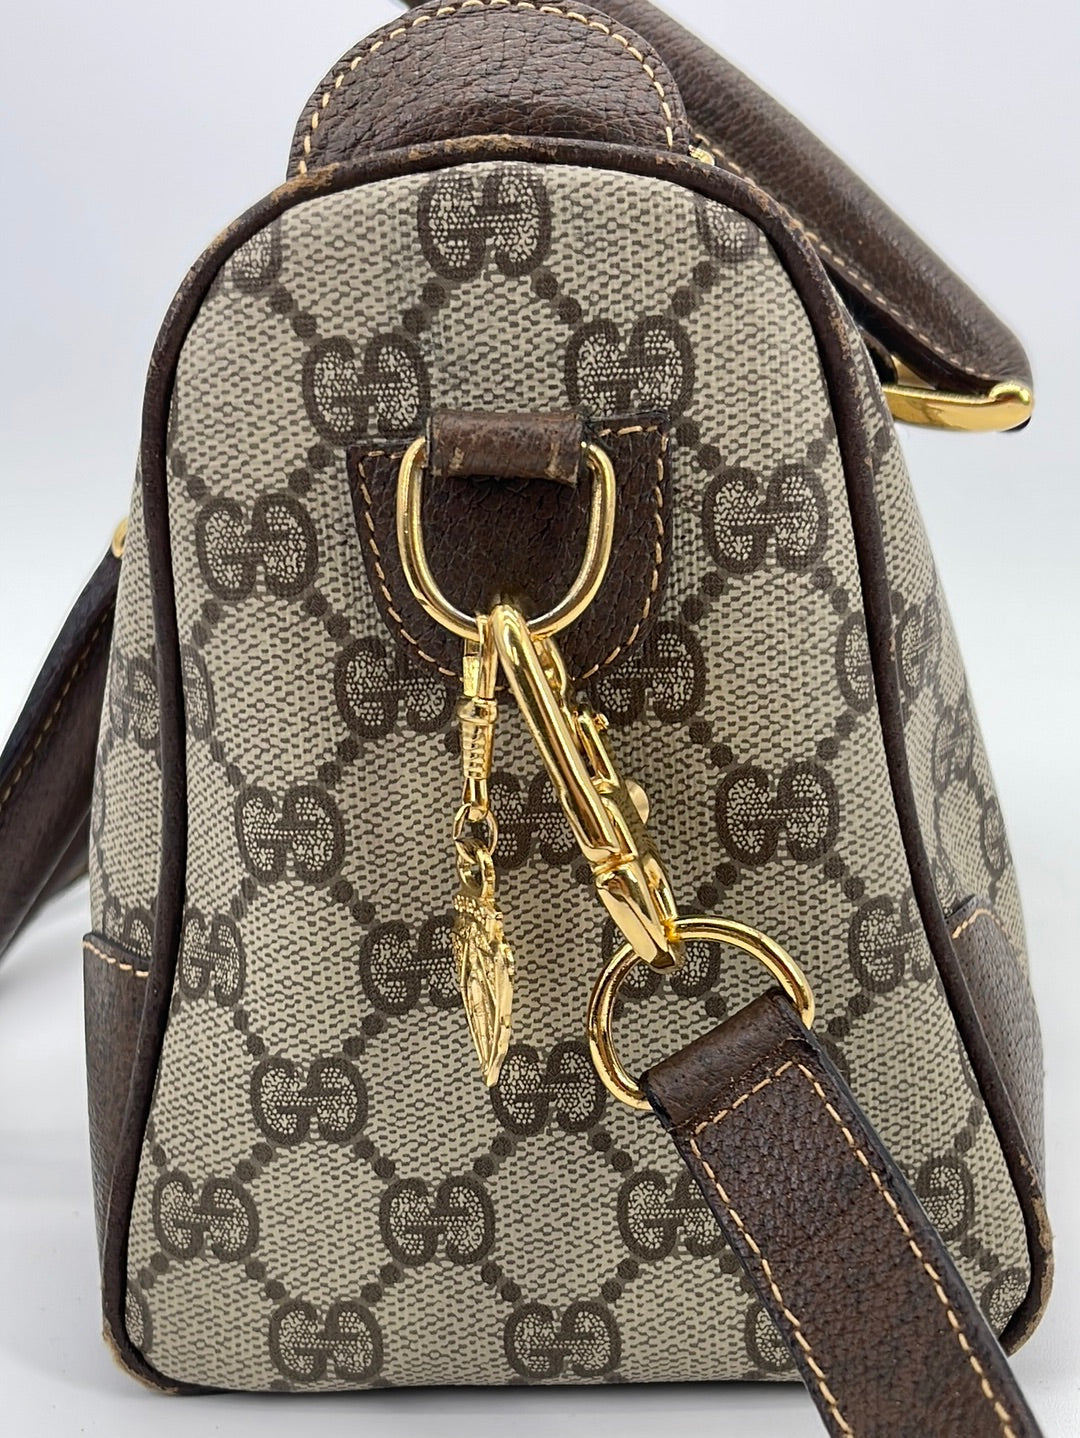 Gucci Monogram Ophidia Boston Bag